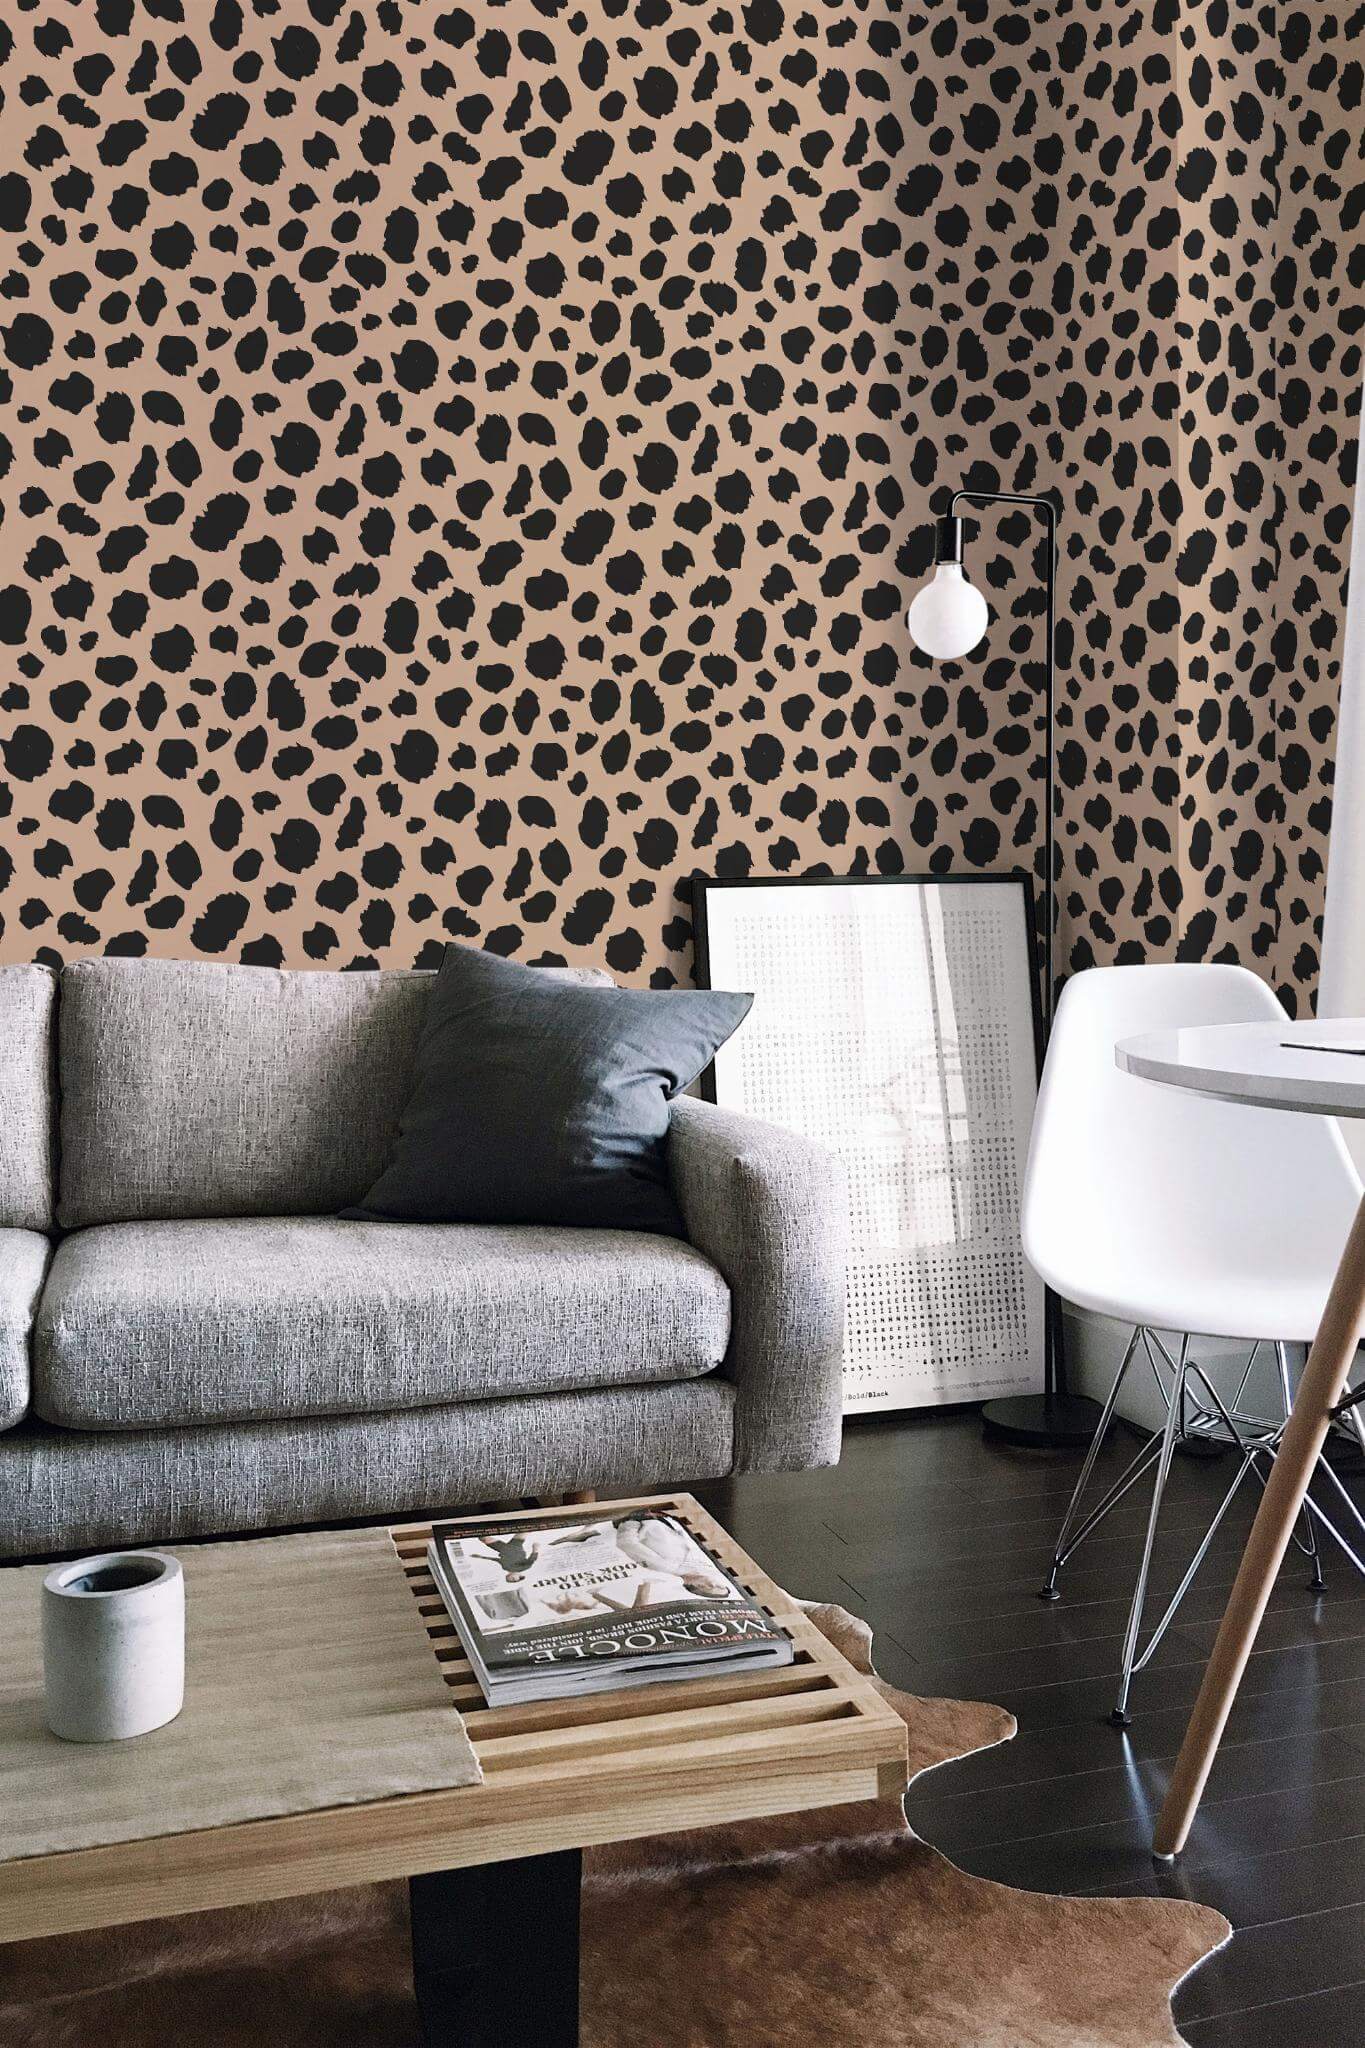 https://fancywalls.eu/wp-content/uploads/aesthetic-cheetah-print-removable-wallpaper-in-industrial-scandinavian-style-living-room.jpg